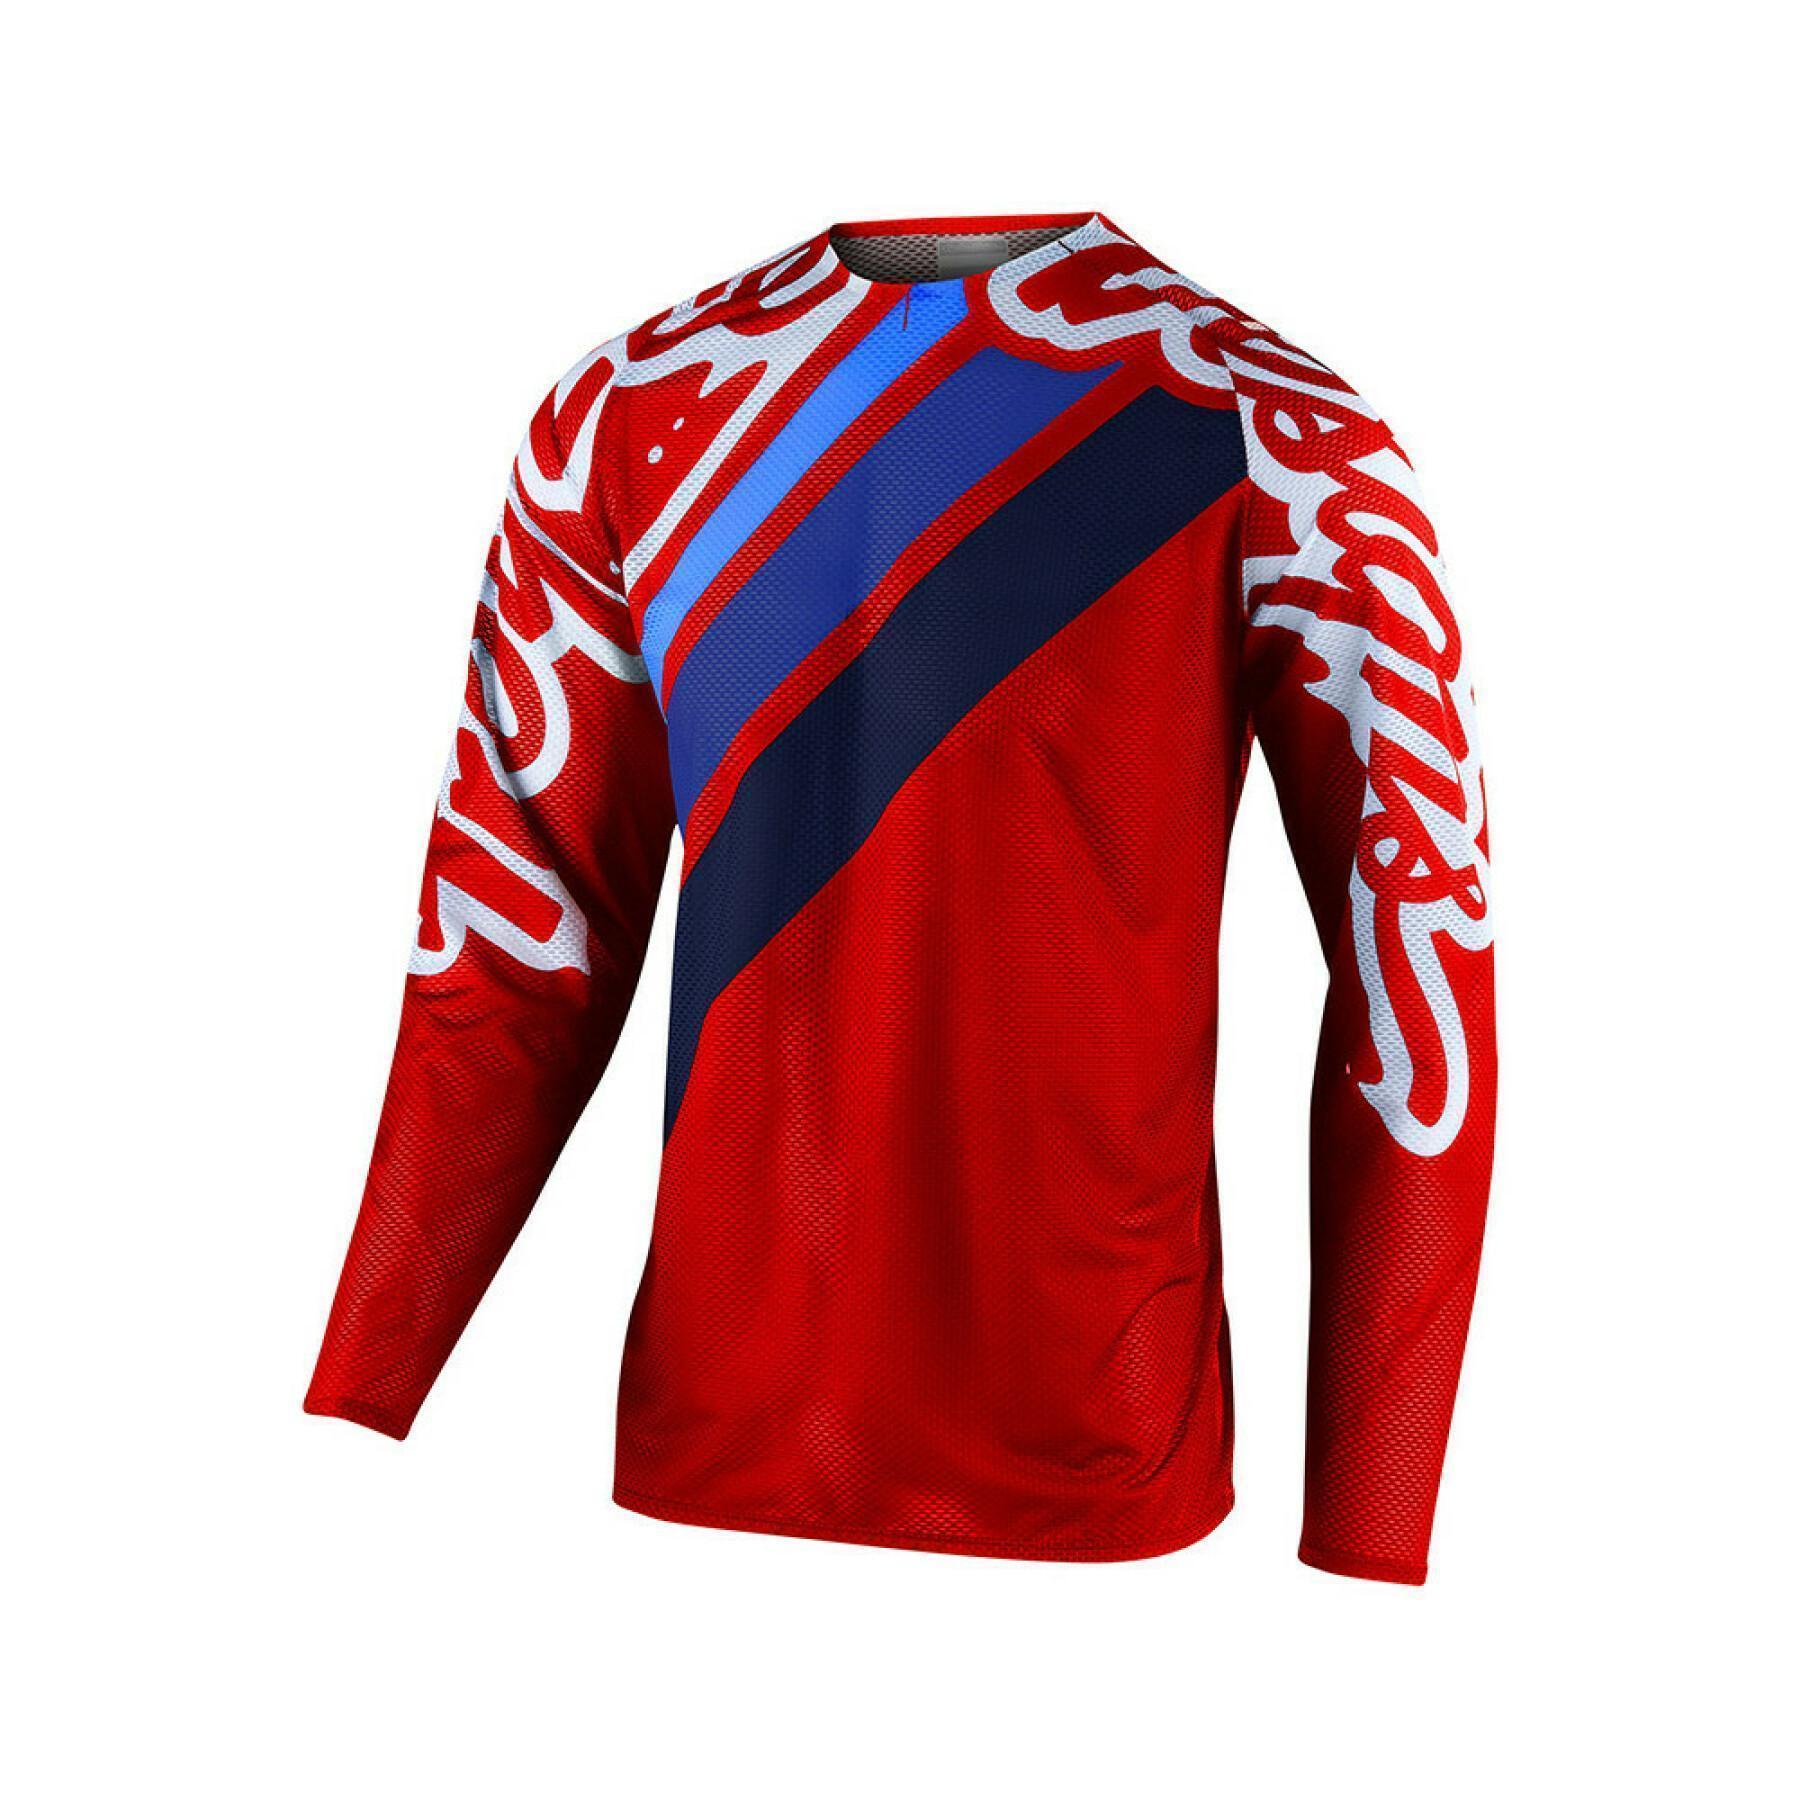 Ultra jersey Troy Lee Designs SE Pro Air seca 2.1